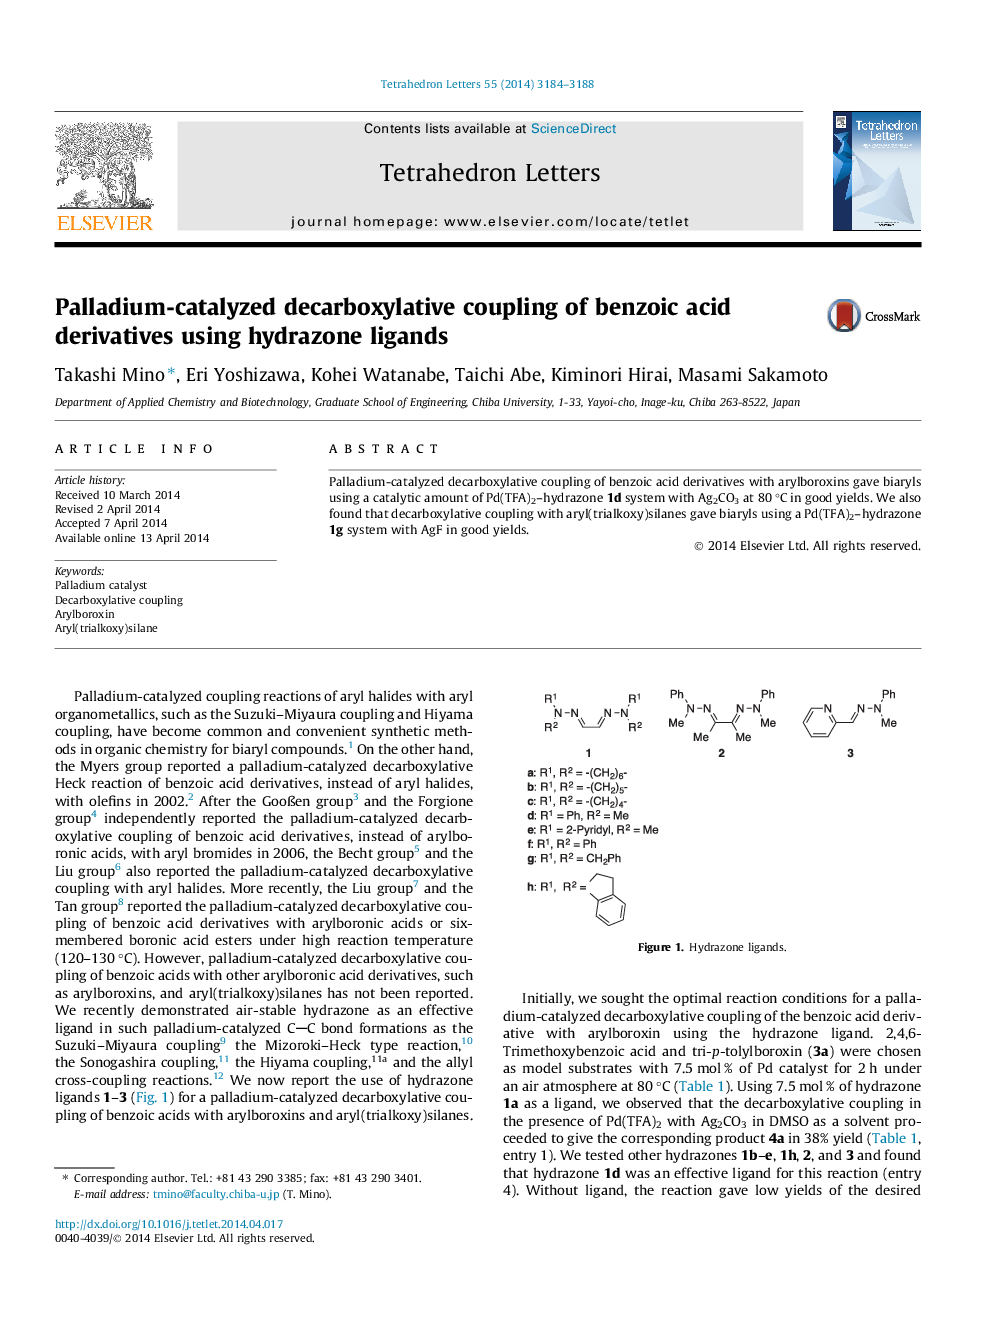 Palladium-catalyzed decarboxylative coupling of benzoic acid derivatives using hydrazone ligands